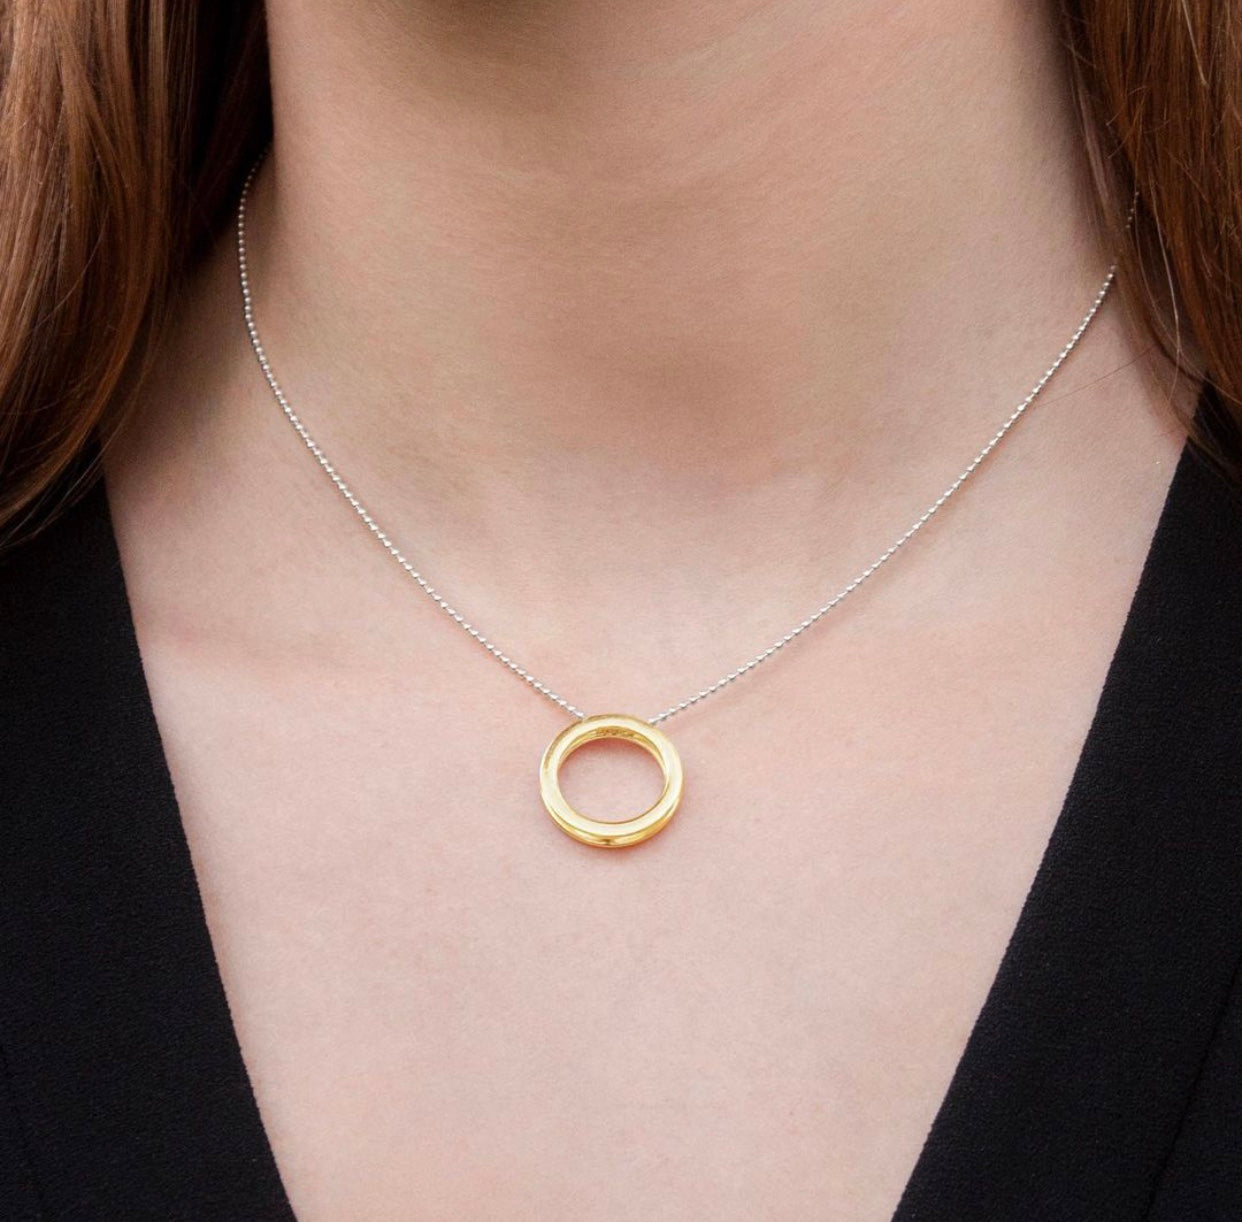 Claudia Lira Jewelry- Link collier gold